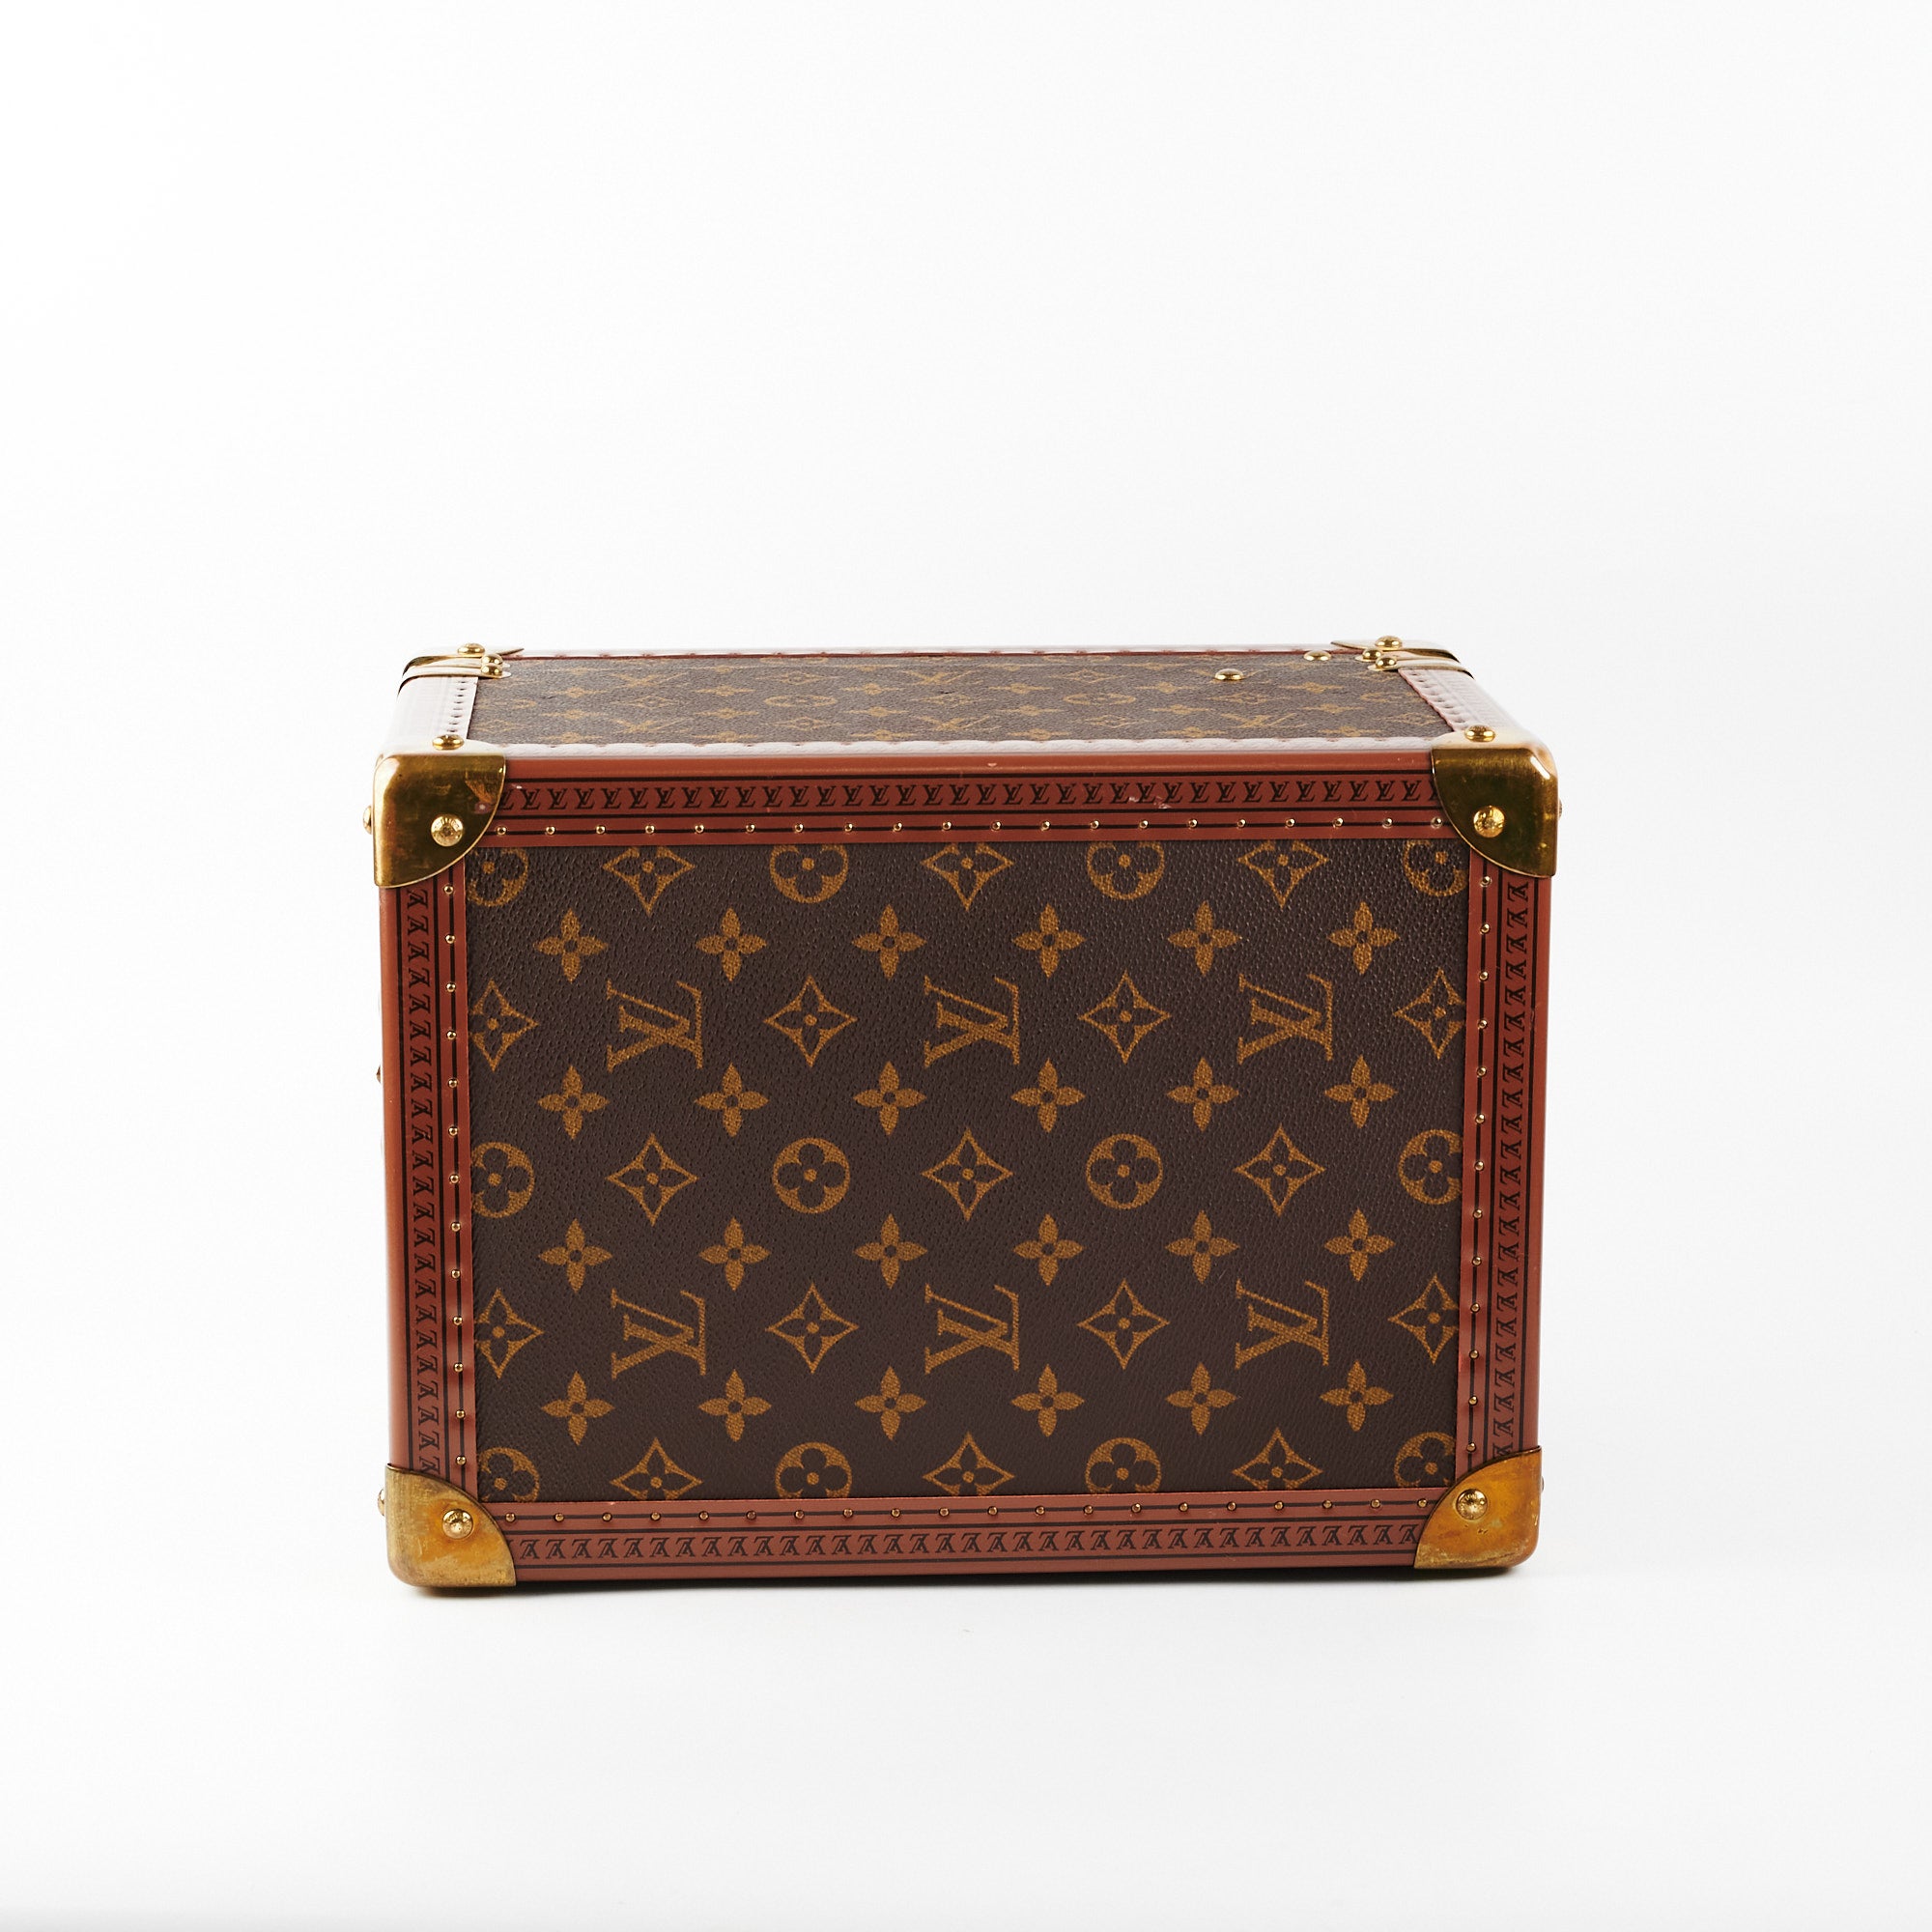 Louis Vuitton Cosmetic Travel Trunk Case Monogram - THE PURSE AFFAIR